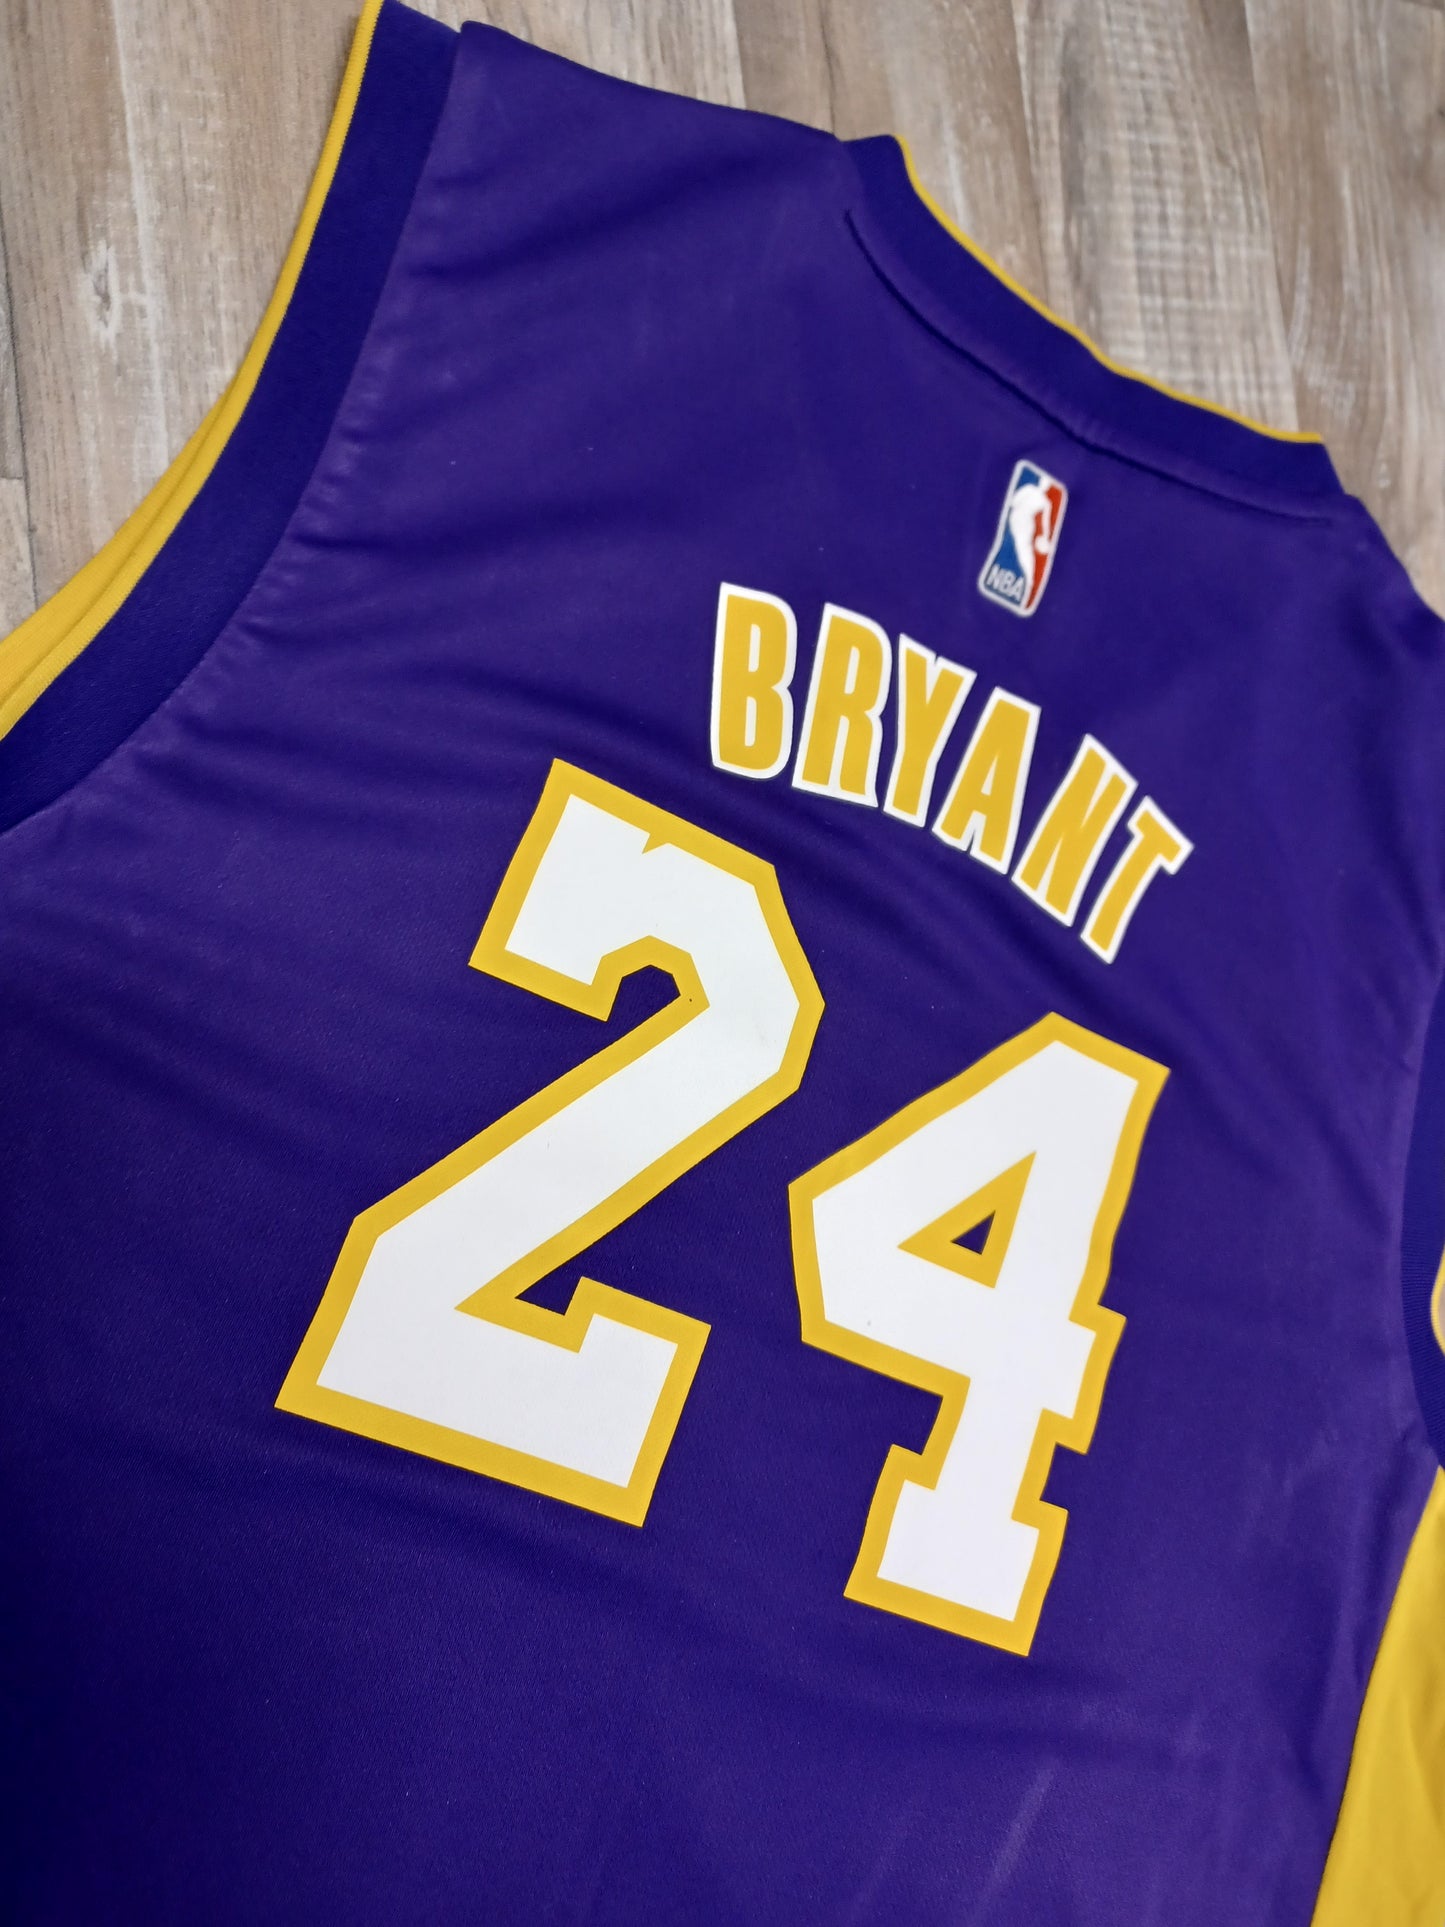 Kobe Bryant Los Angeles Lakers Jersey Size Medium